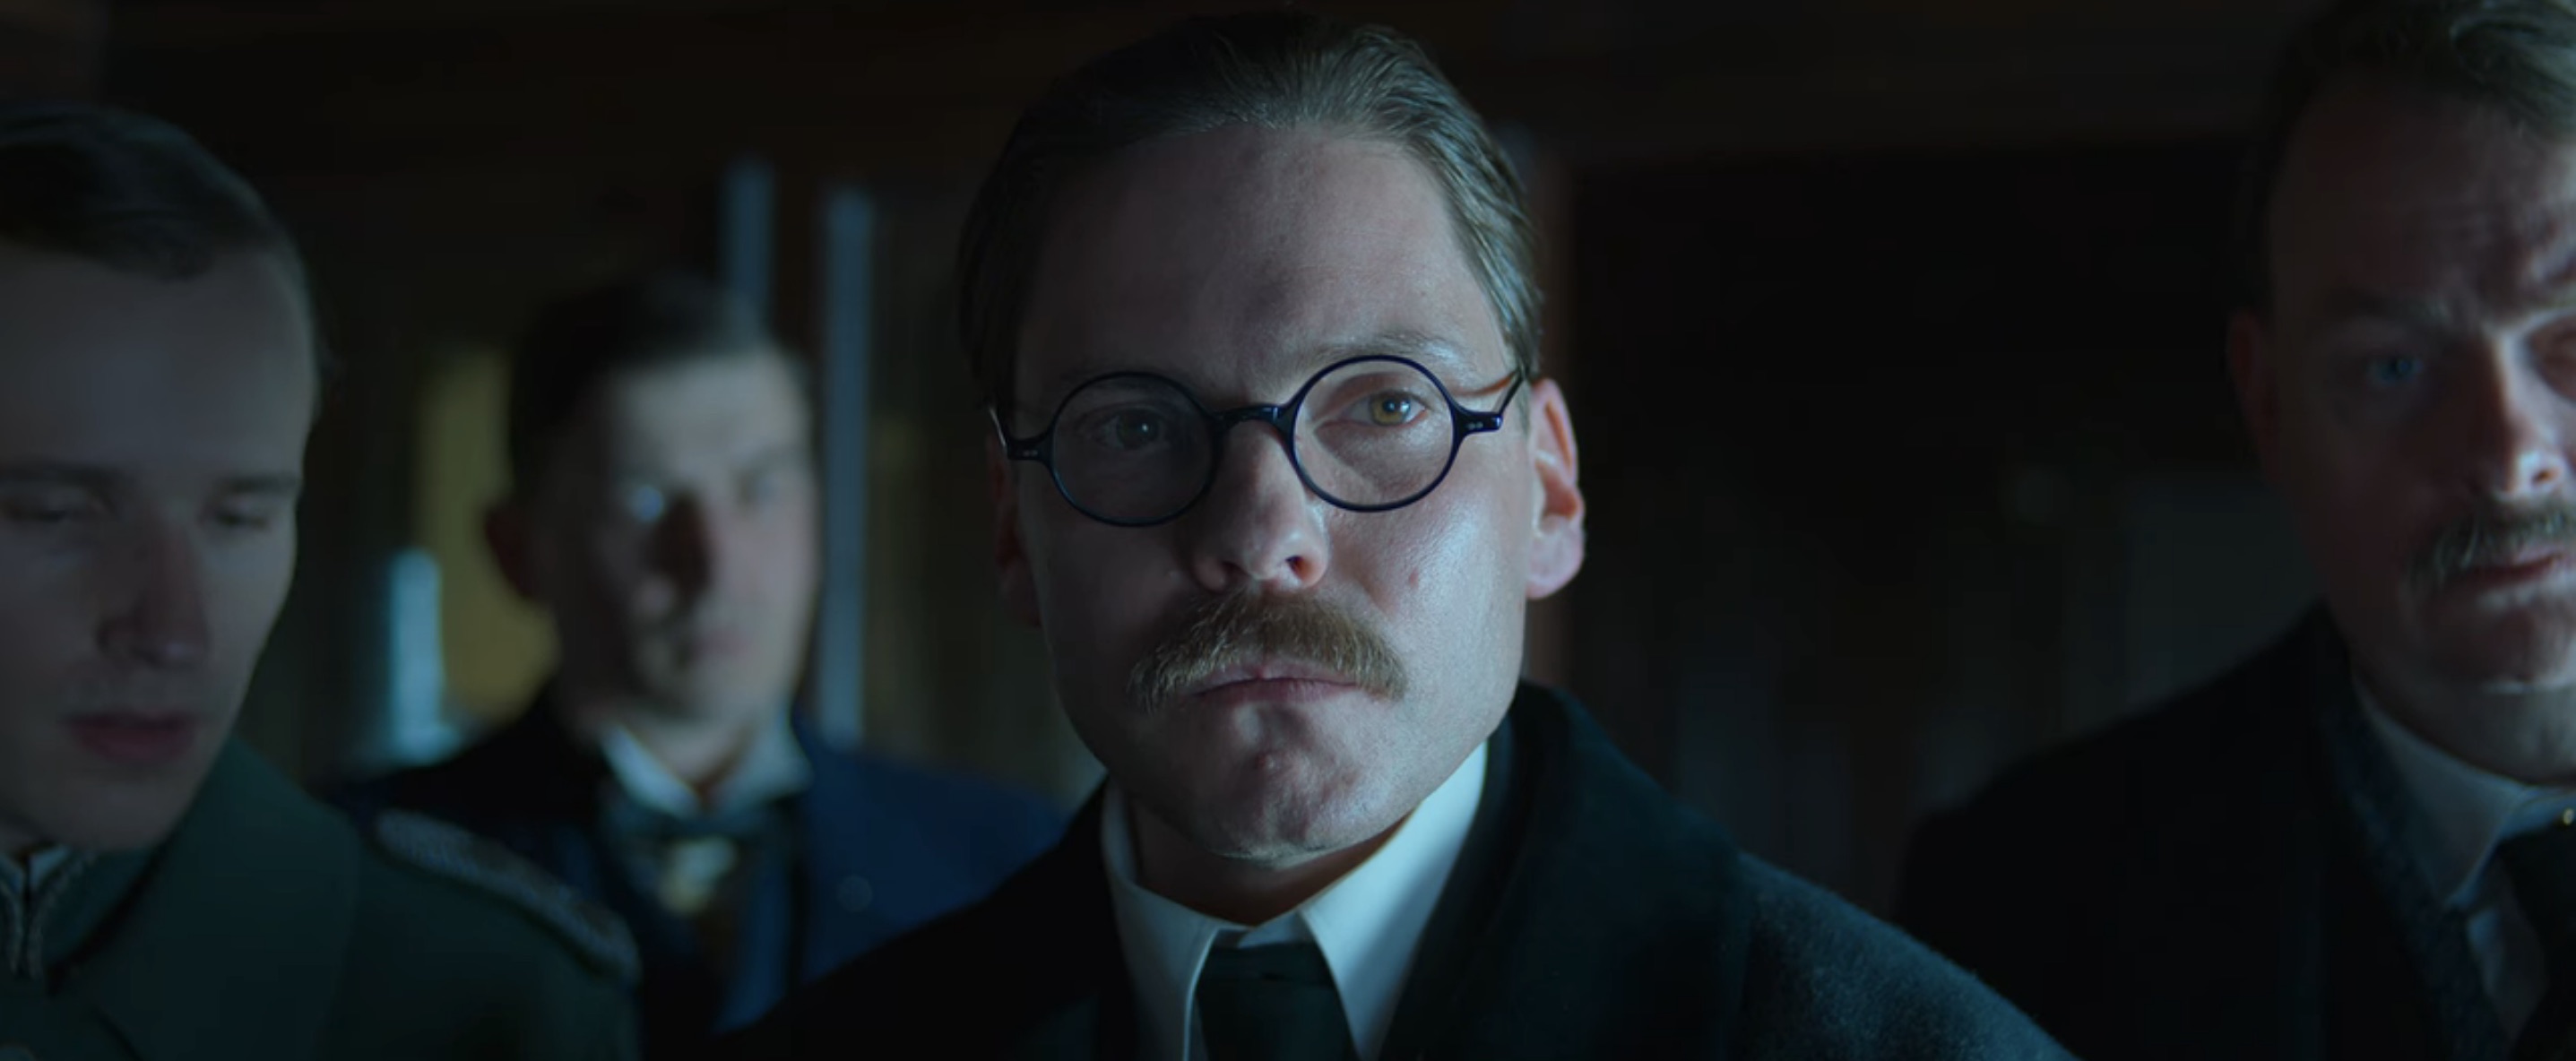 All Quiet on the Western Front Cast on Netflix - Daniel Brühl as Matthias Erzberger